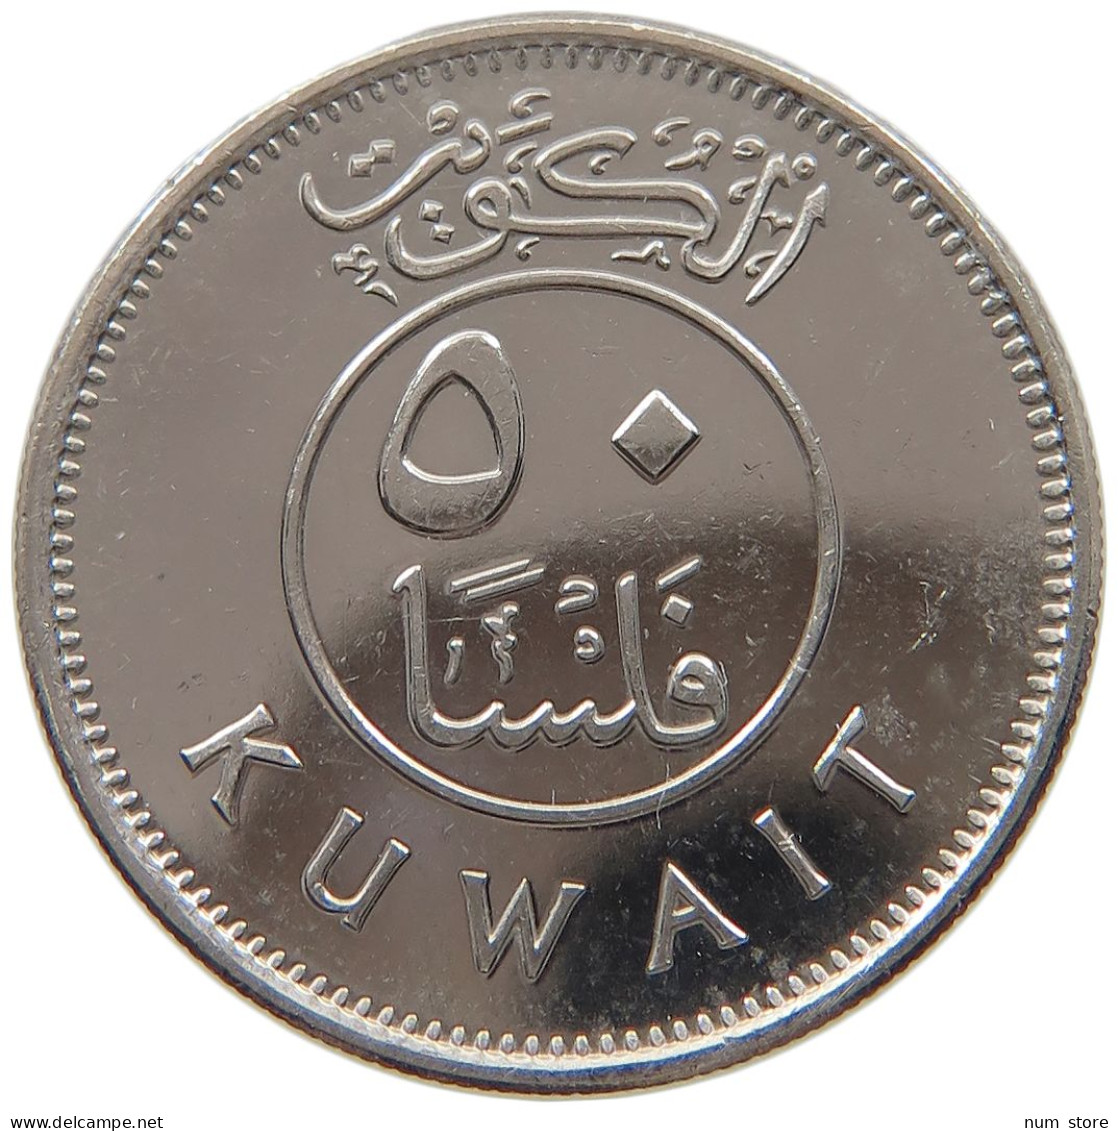 KUWAIT 50 FILS 2012  #c073 0143 - Kuwait